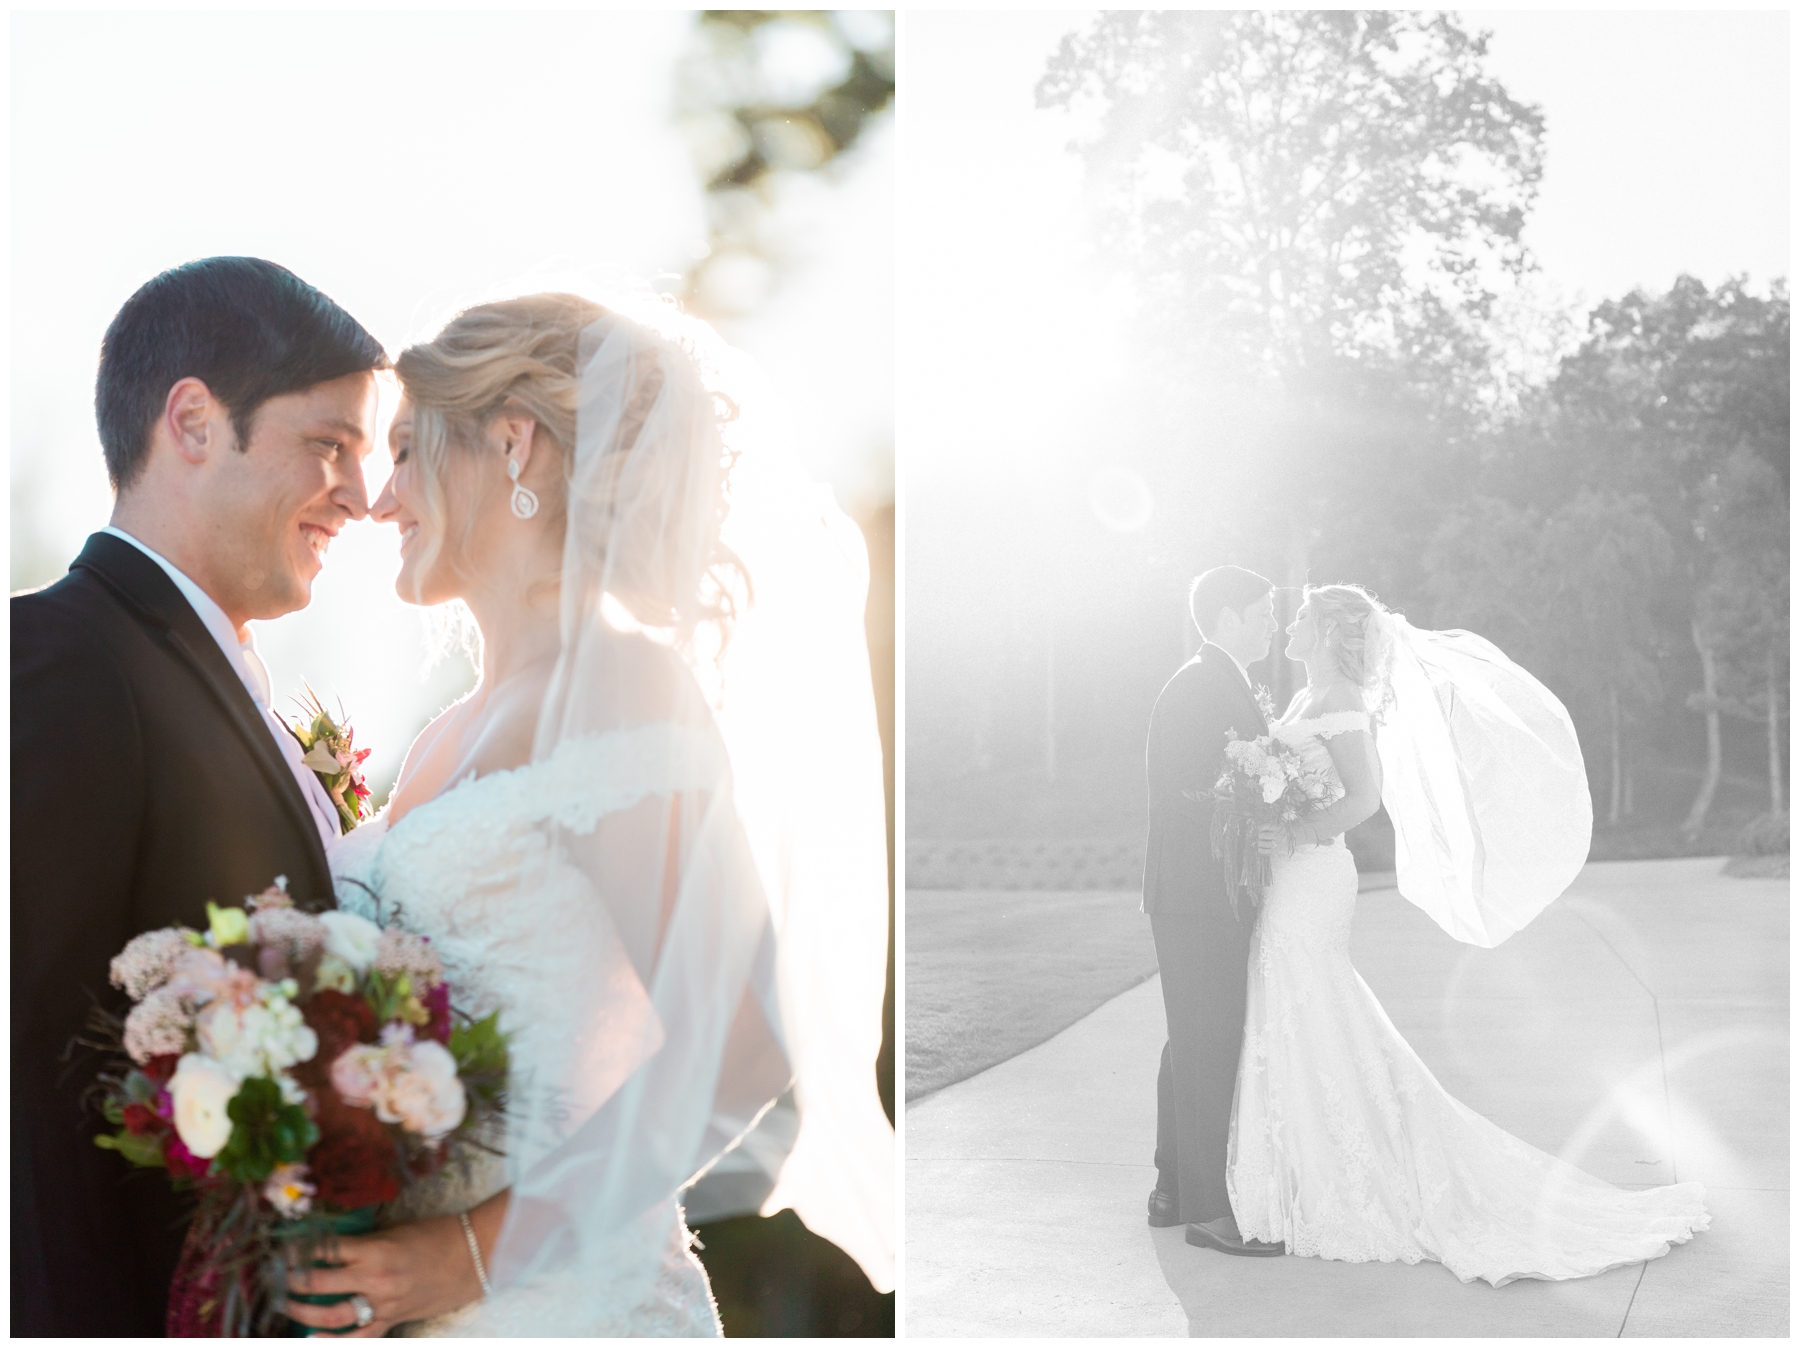 Heather Dettore Photography_Atlanta_Wedding Venue_ Bride and Groom_Sunset Portraits_Greystone_Estate